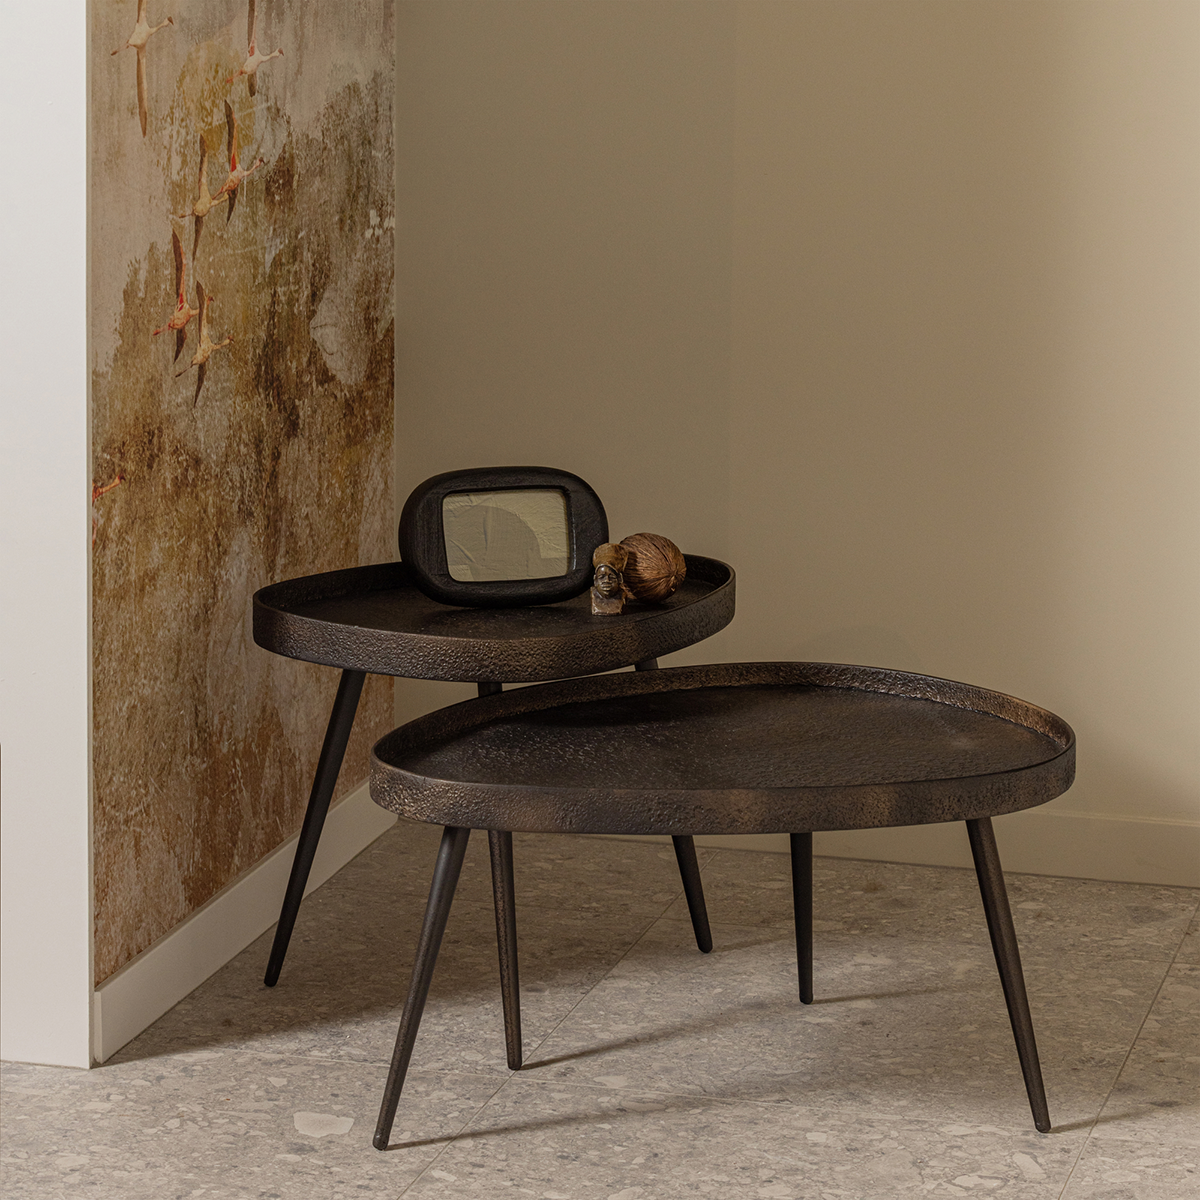 Crude Antique Bronze Side Table (2/Set)